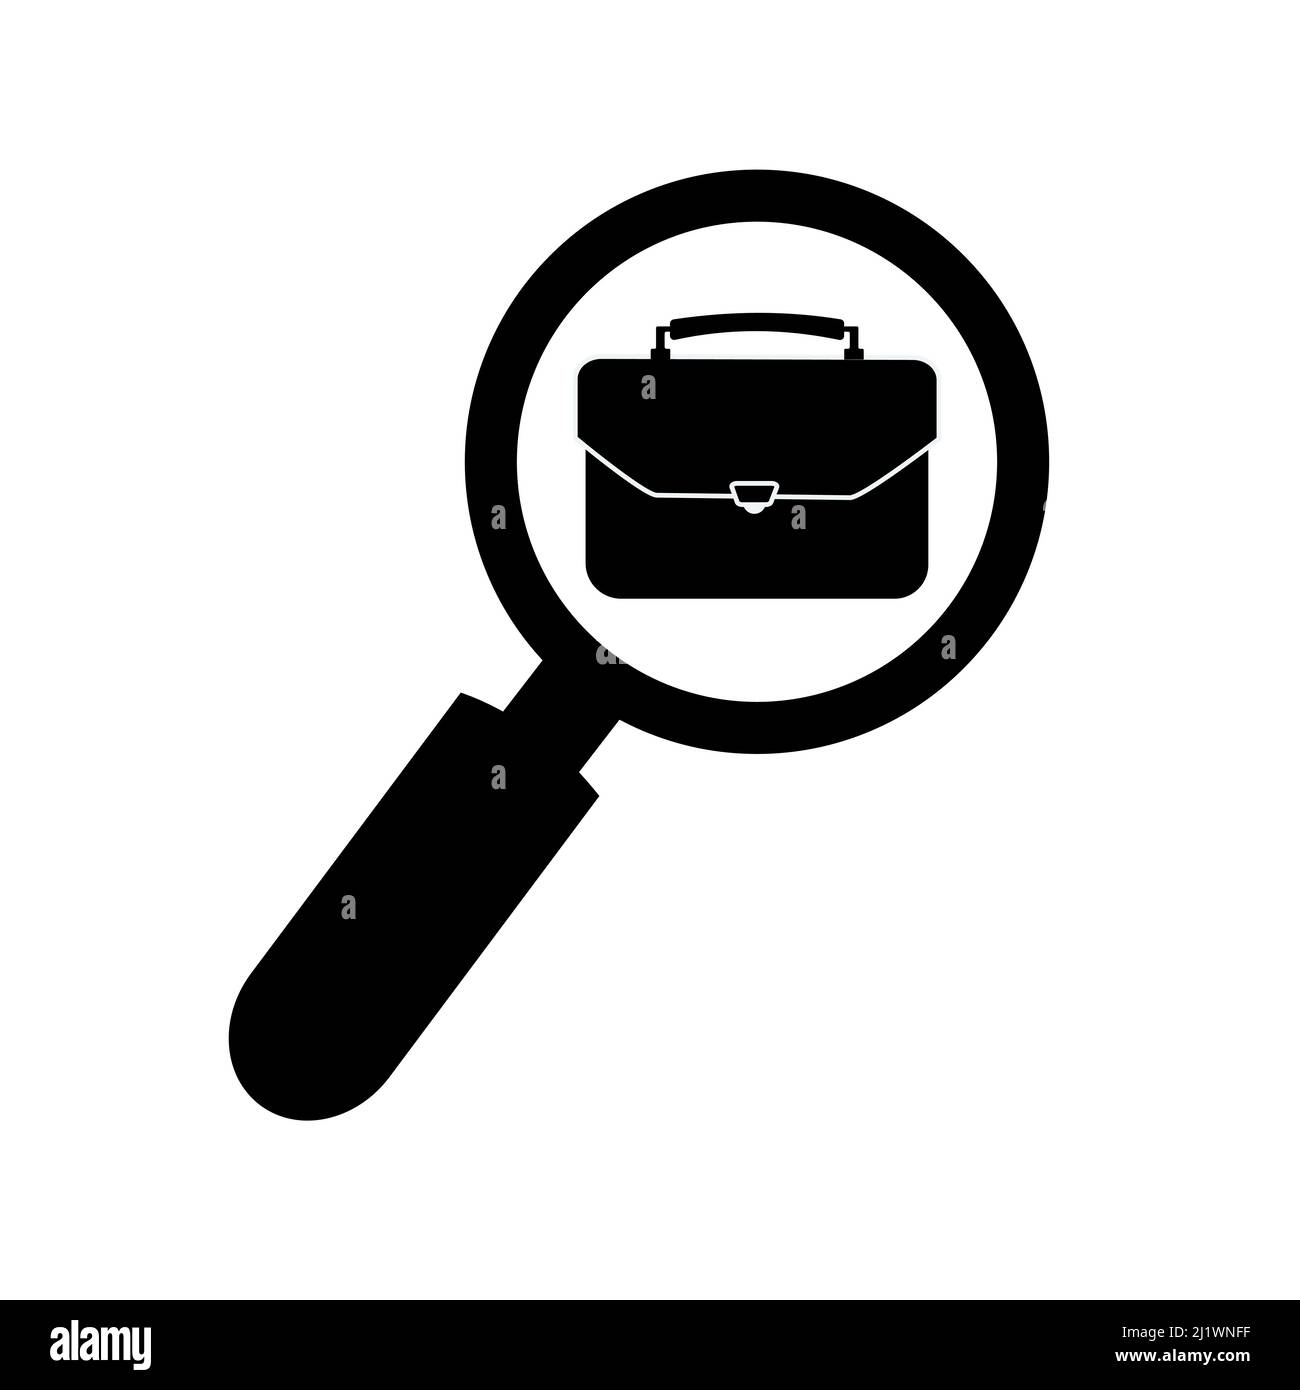 Search job icon, Vector illustration Stock Vector